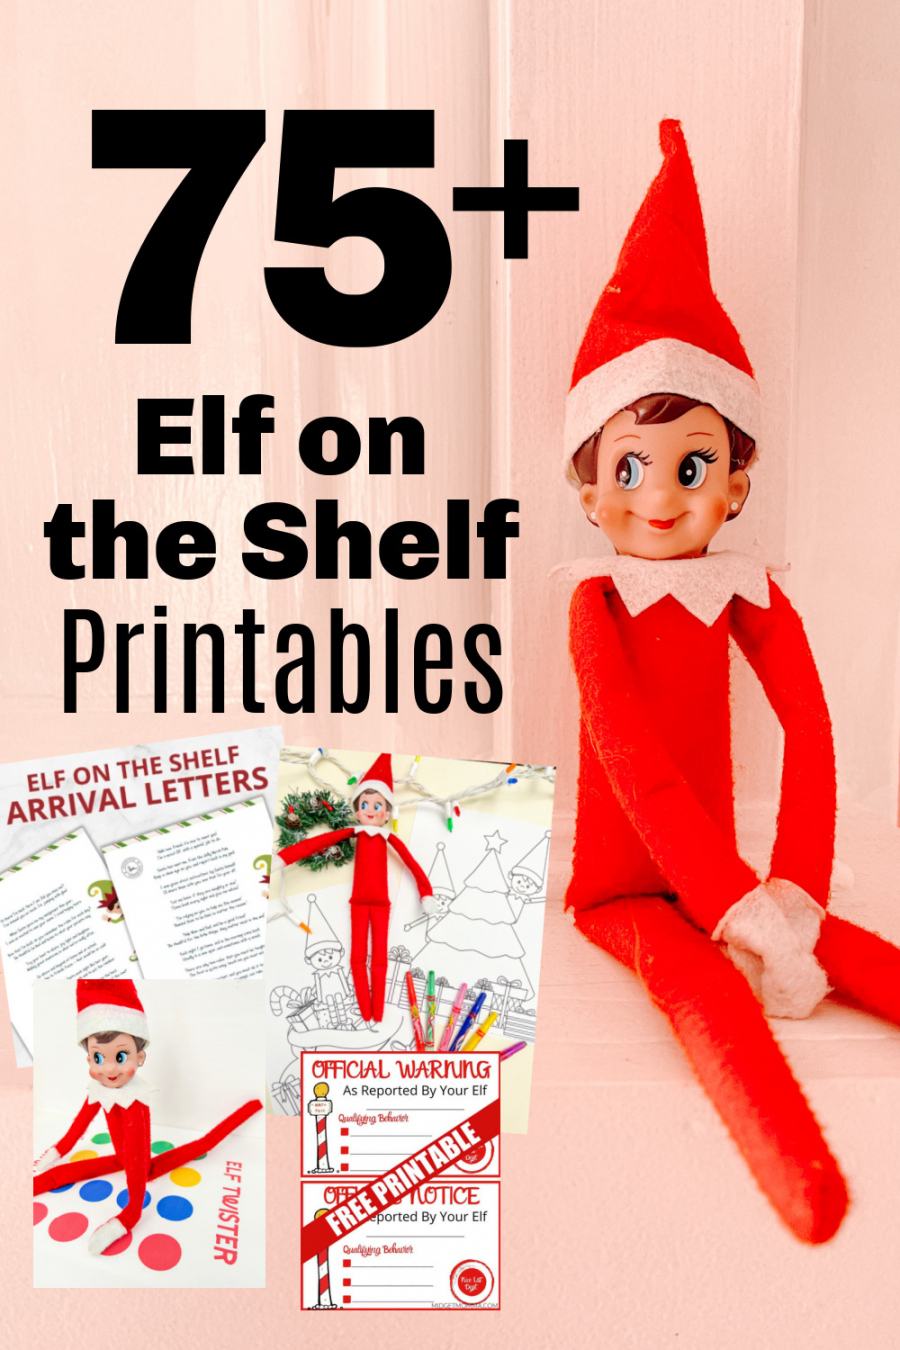 Free Elf On Shelf Printables - Printable - Ultimate List of FREE Elf on the Shelf Printables - Over